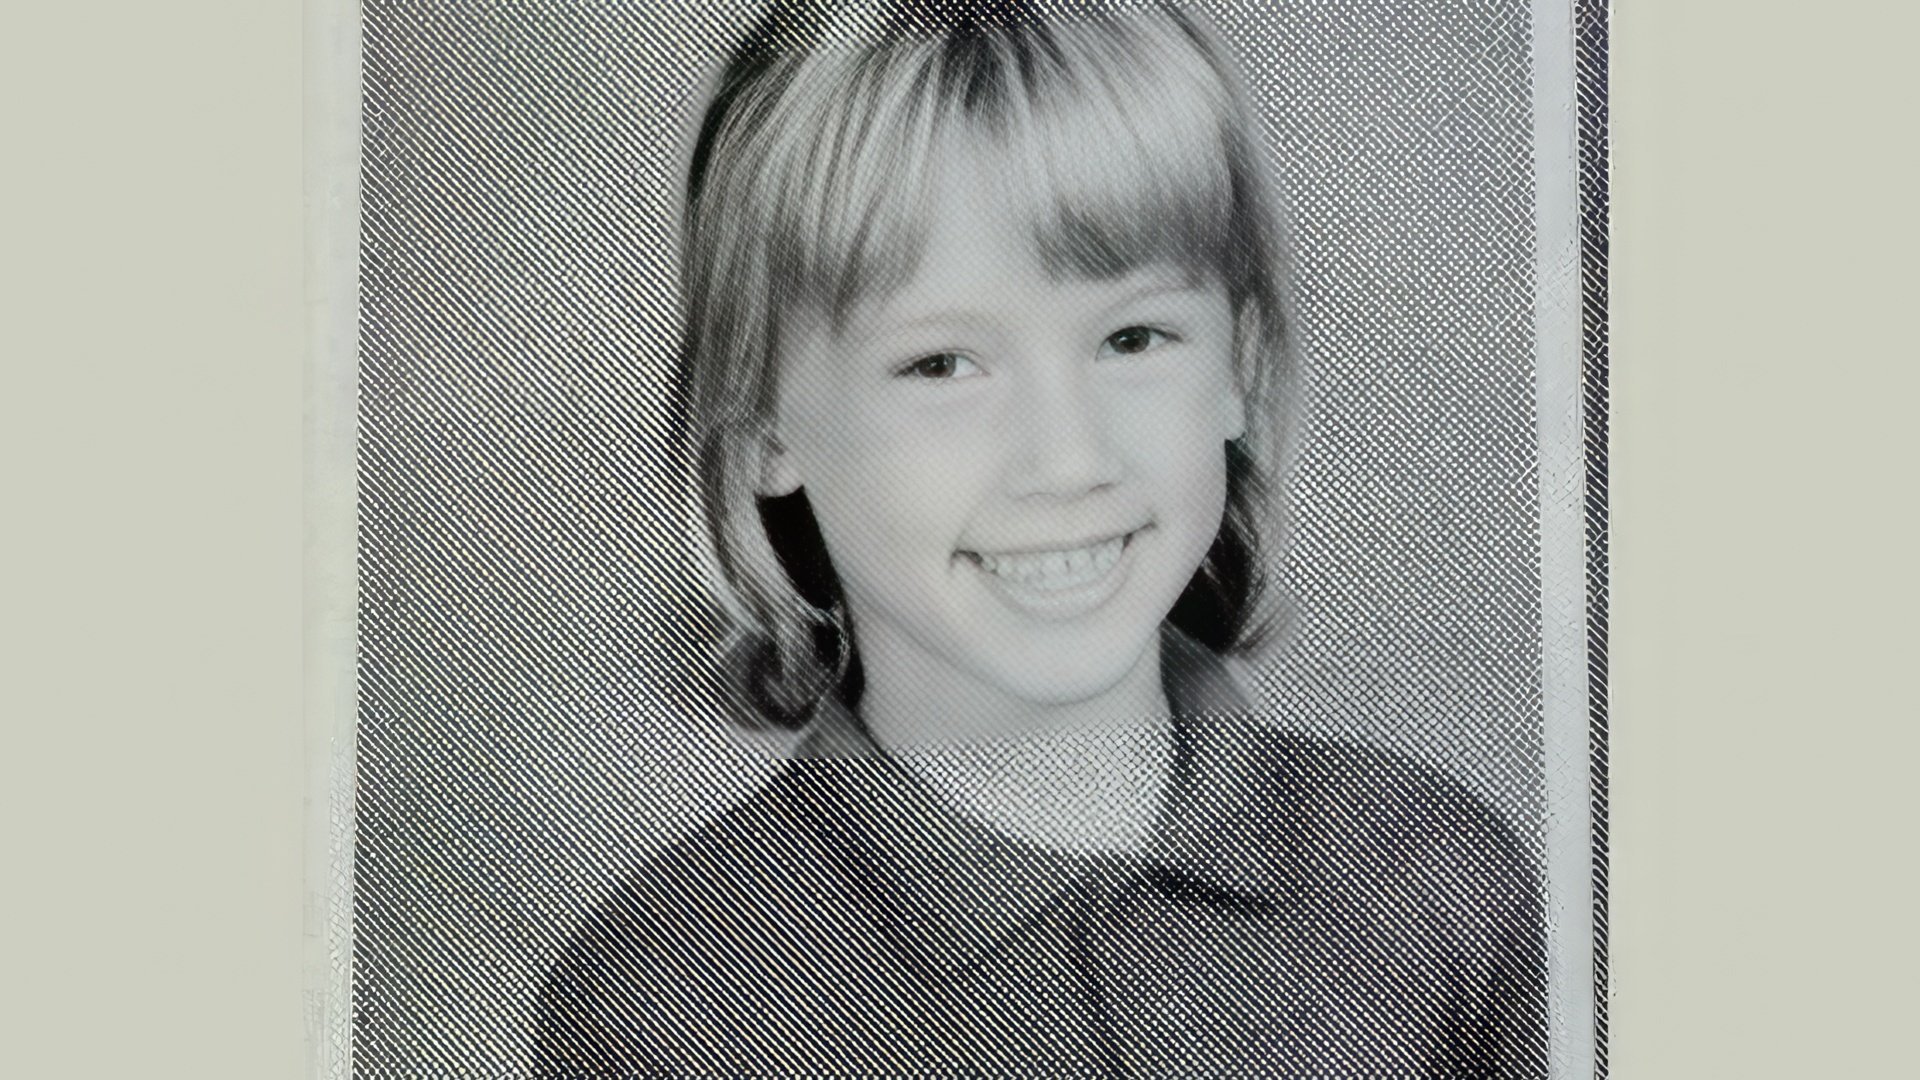 Amber Heard’s childhood photo